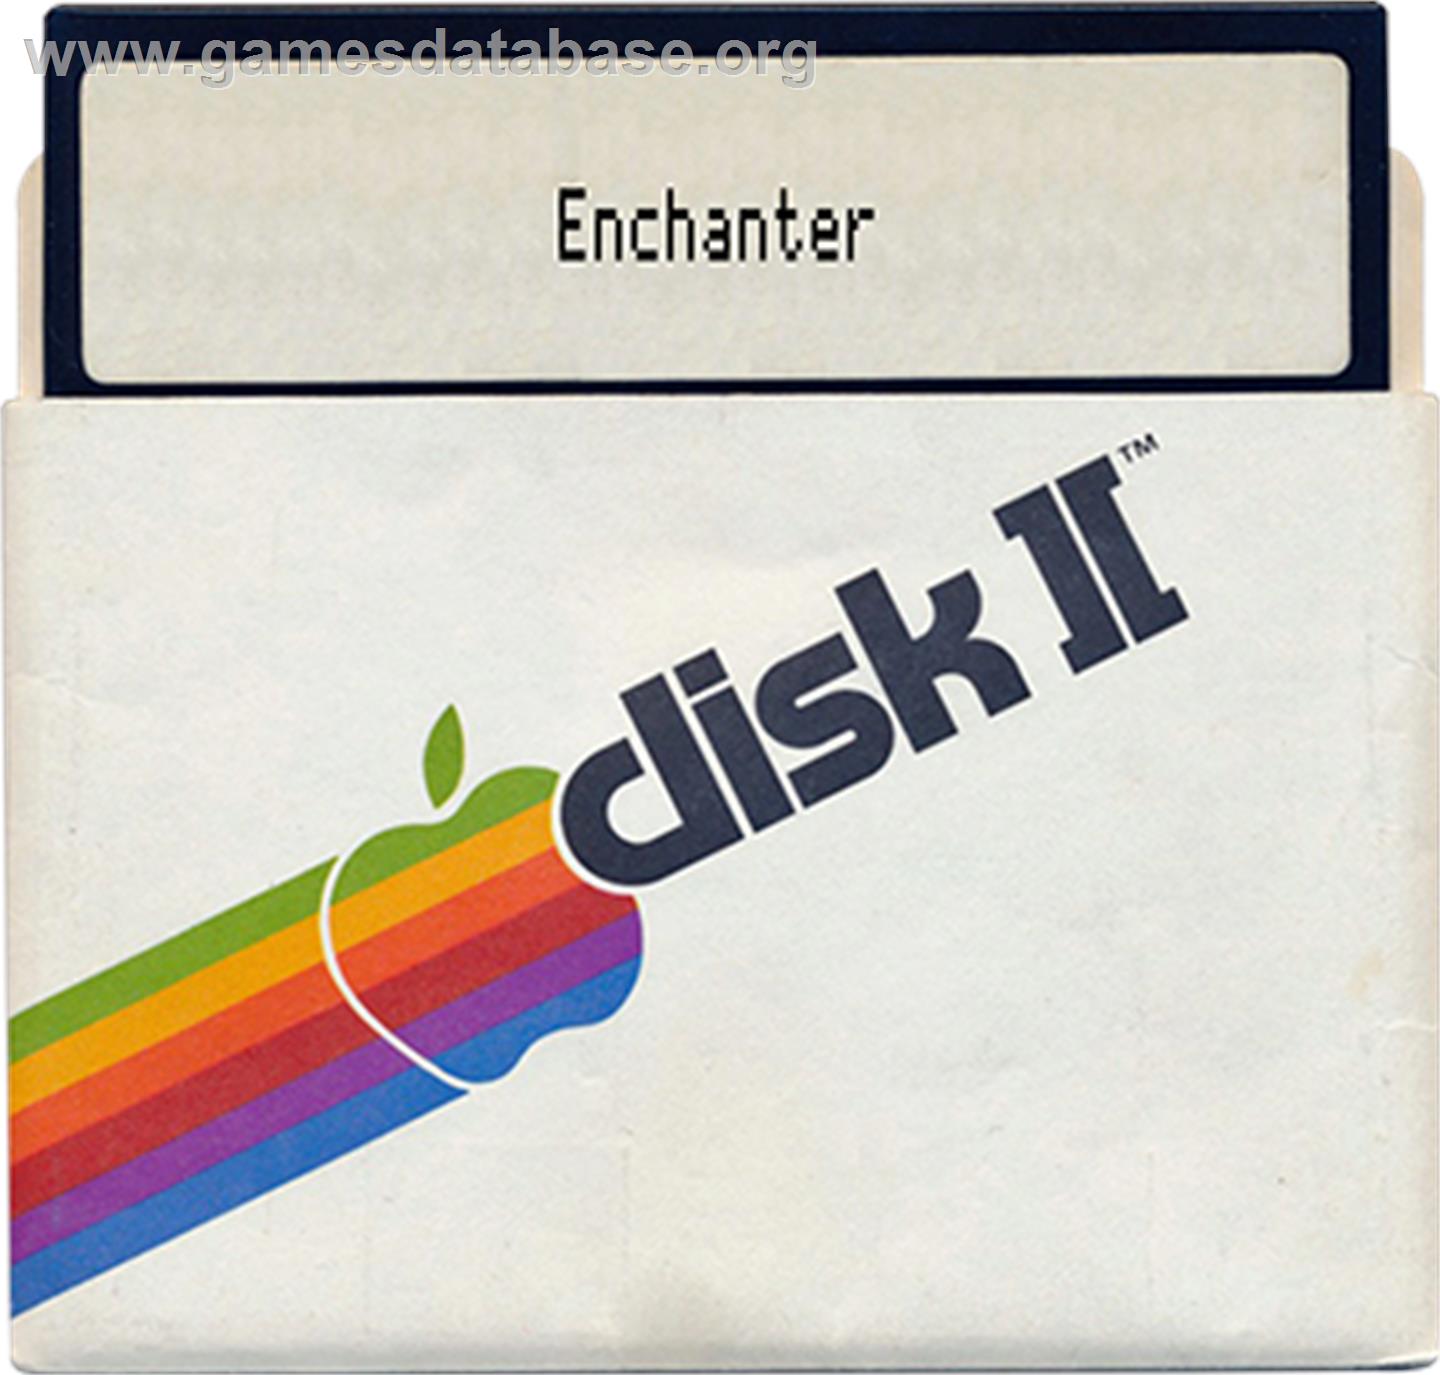 Enchanter - Apple II - Artwork - Disc